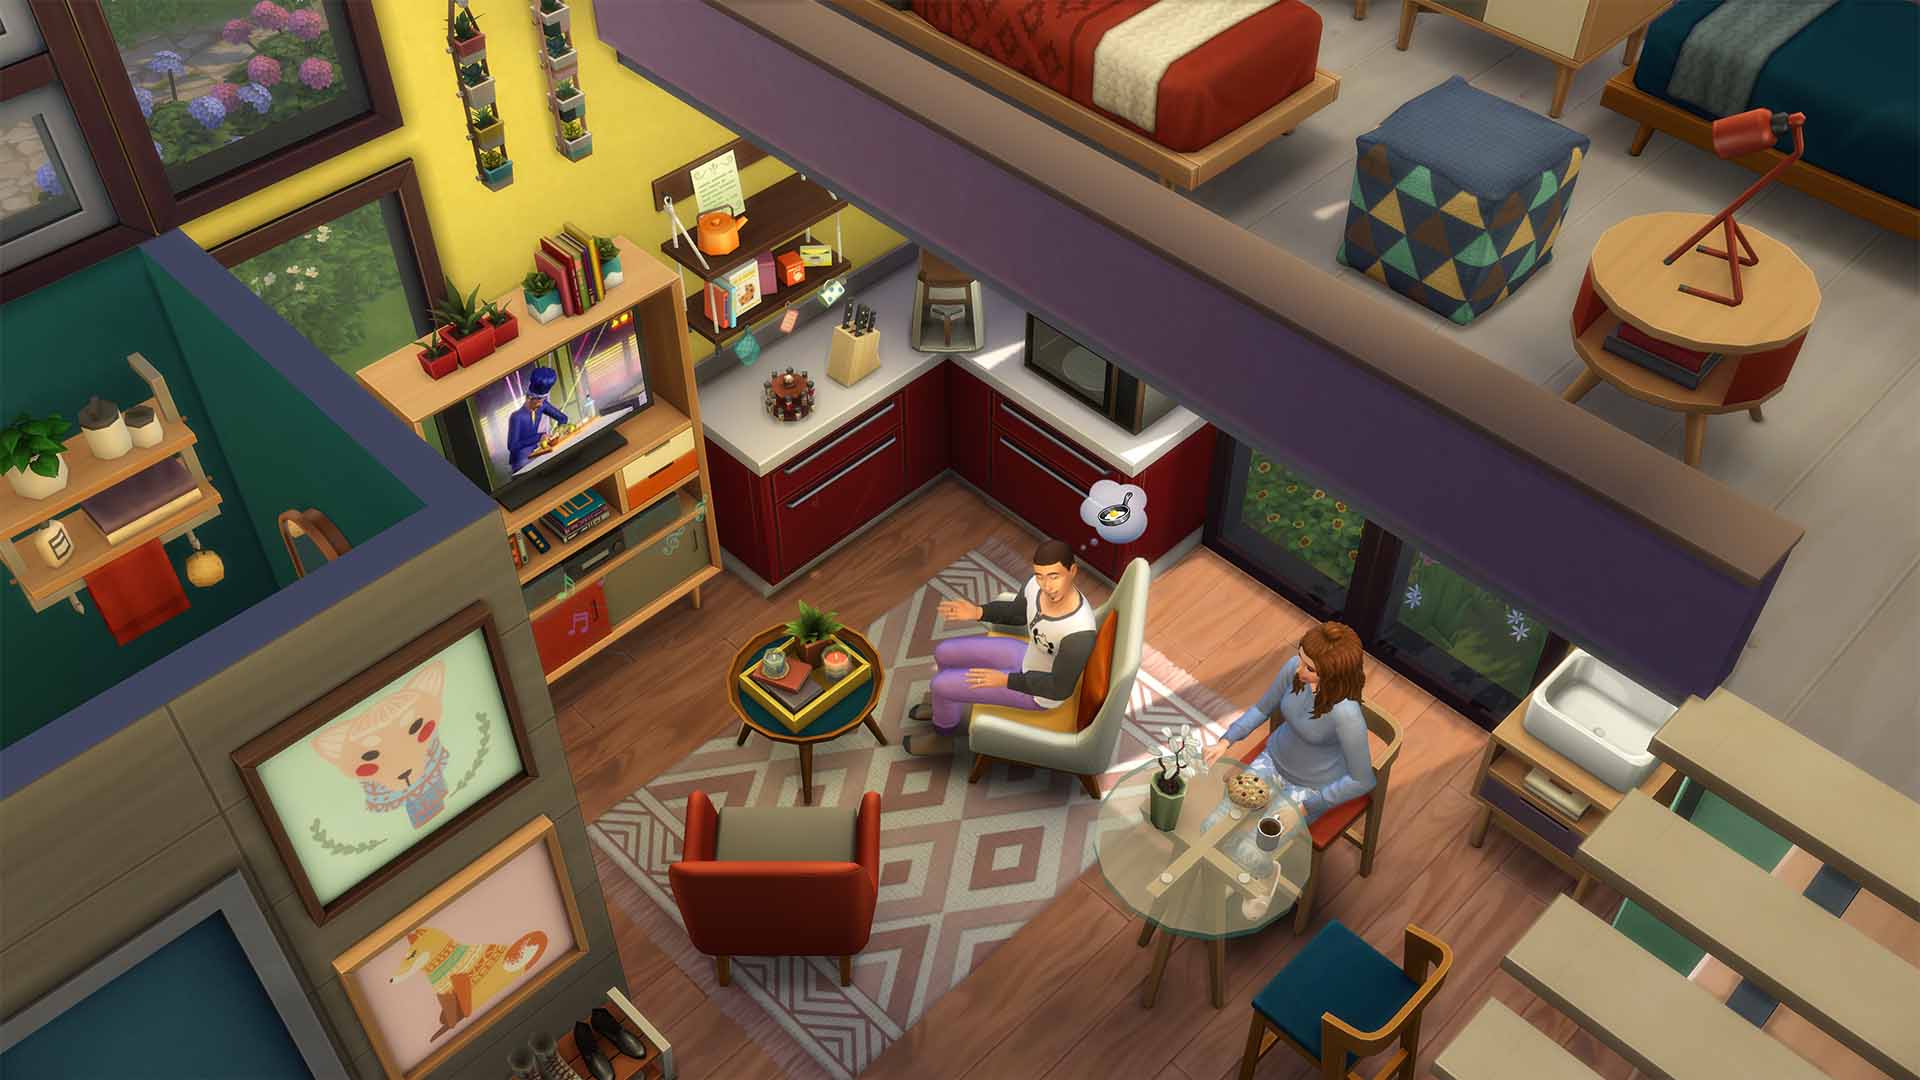 The Sims 4 Tiny Living Stuff - The Sim Architect